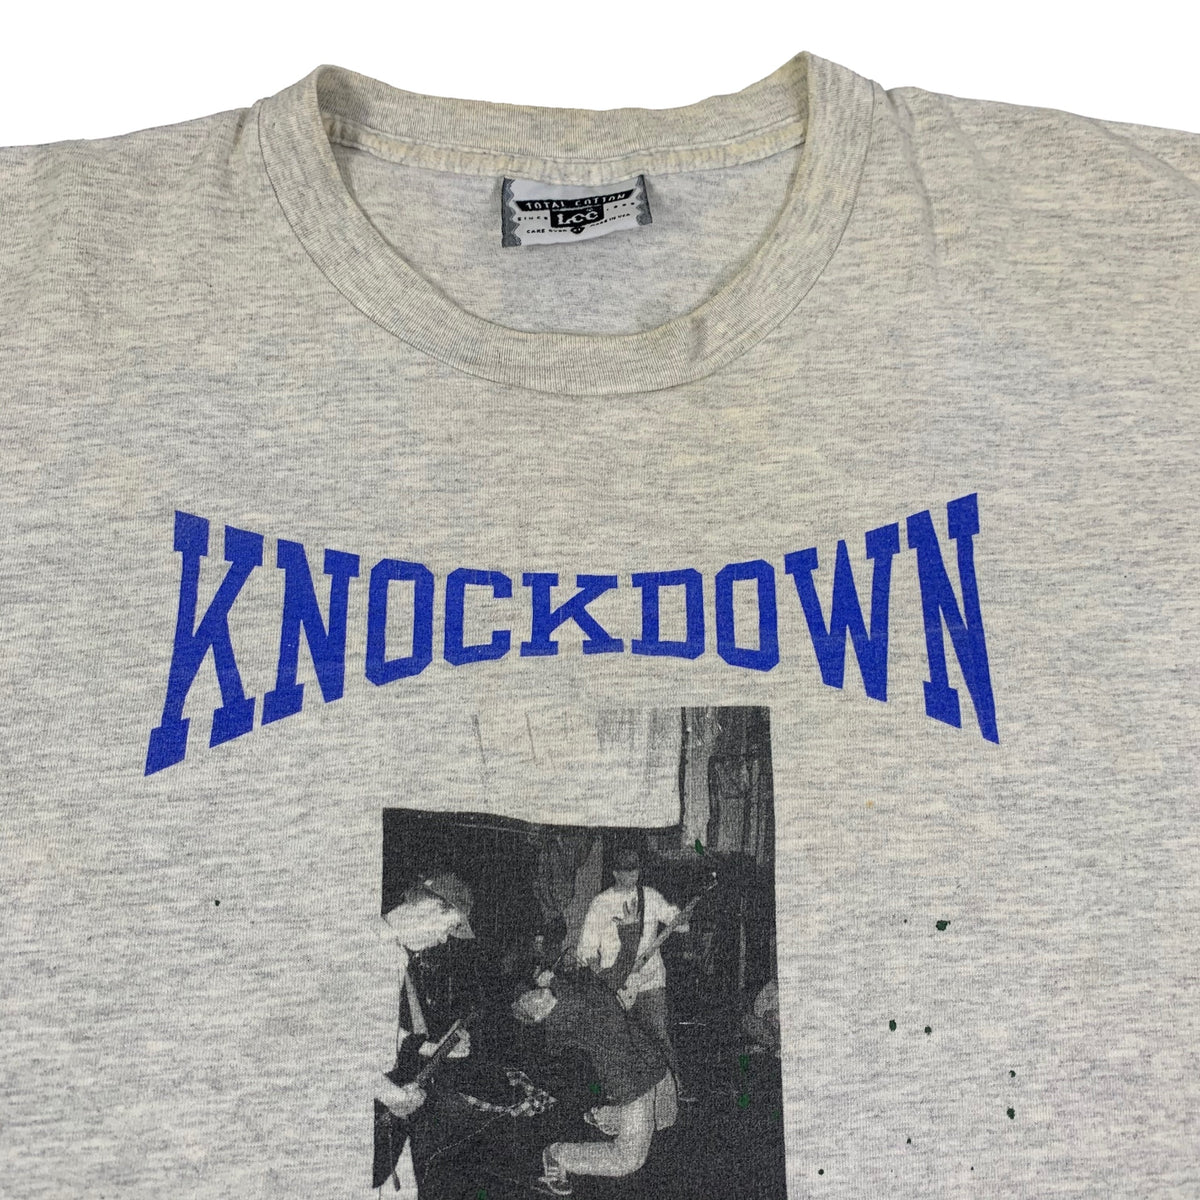 Vintage Knockdown &quot;Exchange Records&quot; T-Shirt - jointcustodydc